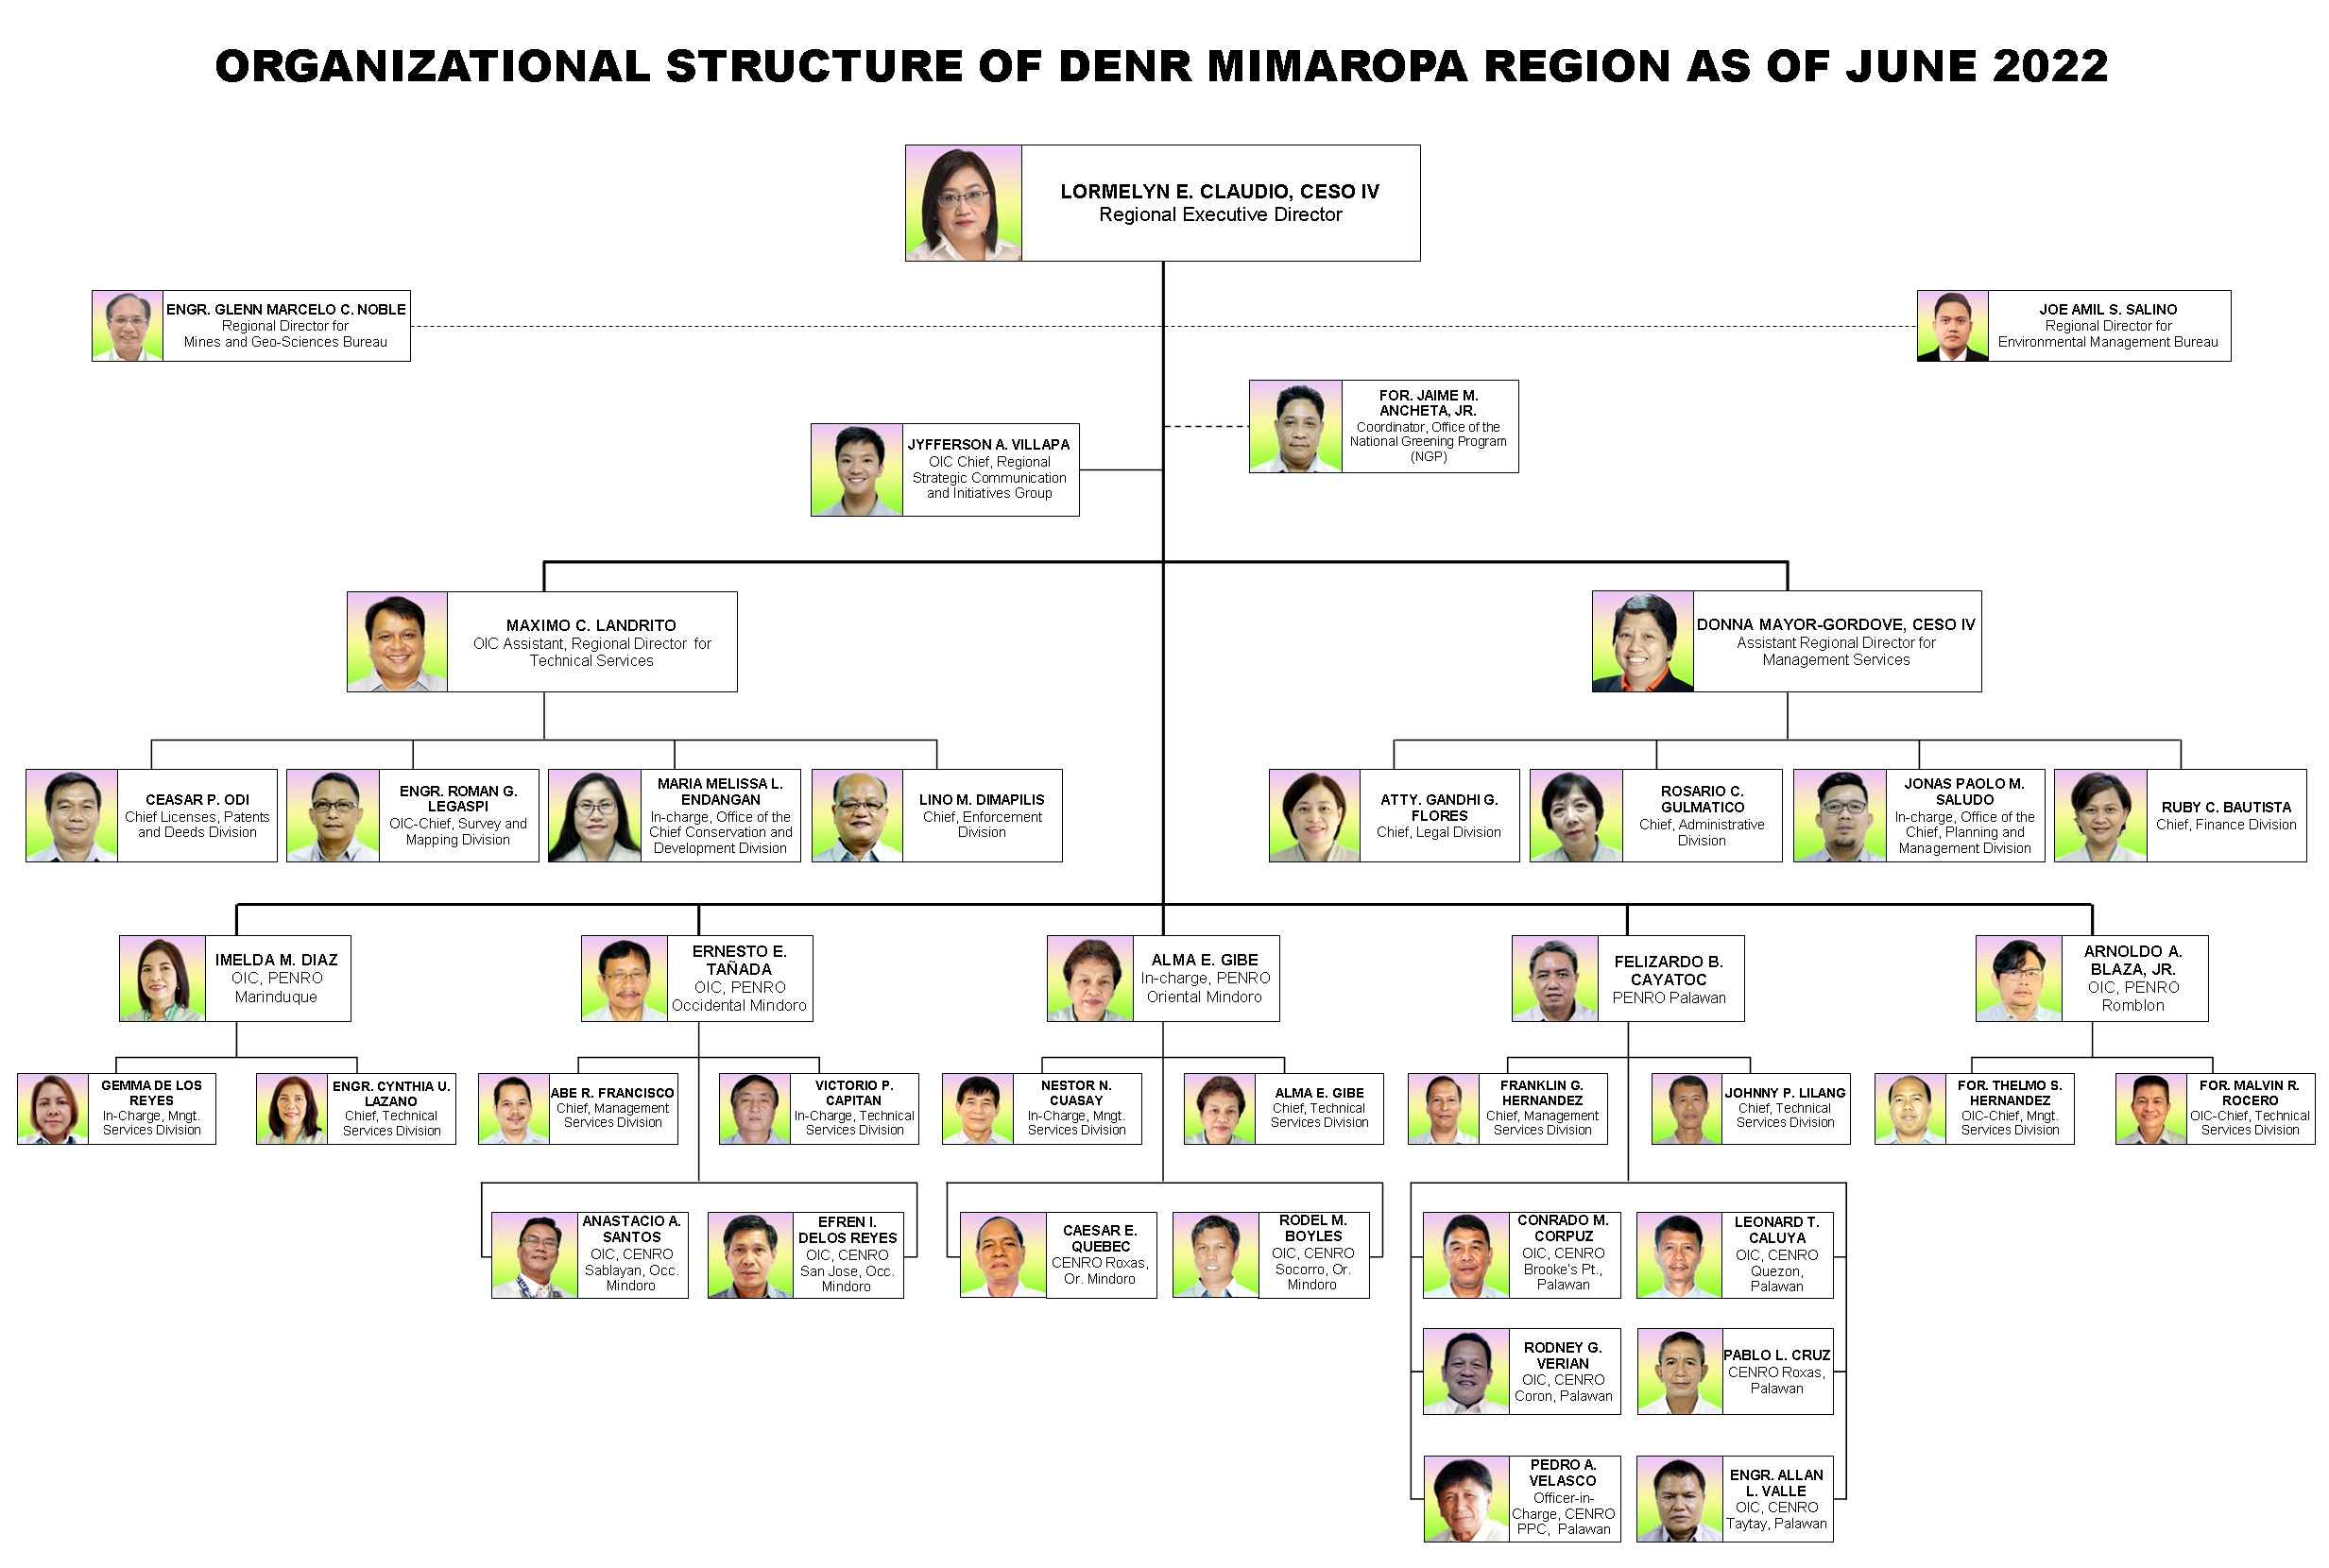 DENR MIMAROPA Region Organizational Structure as of June 2022